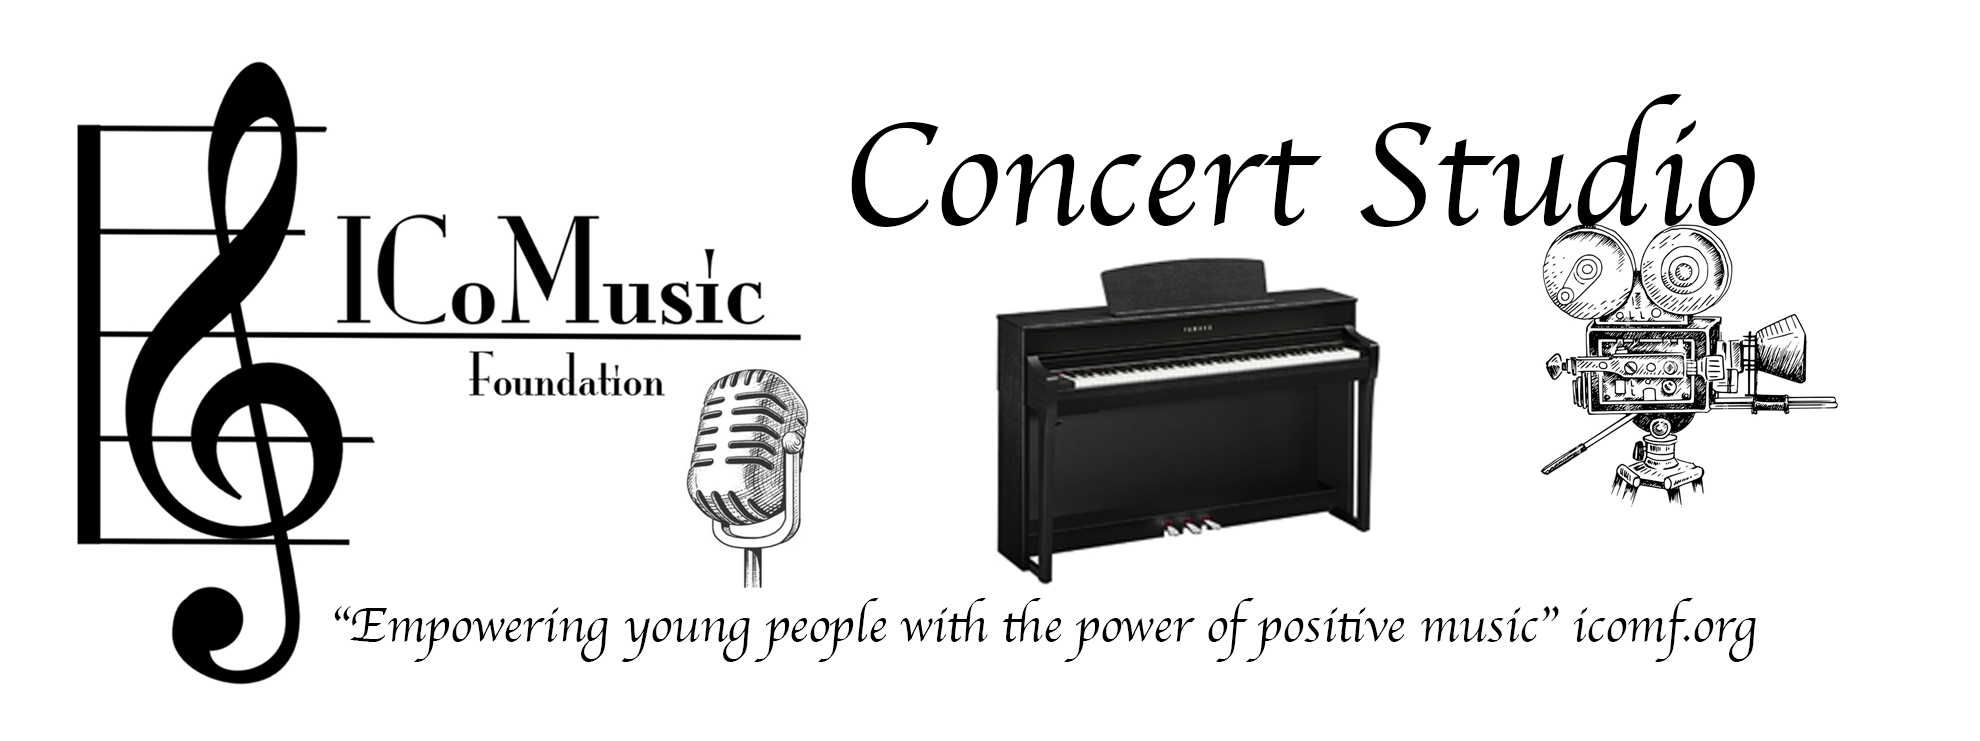 Concert Studio Banner for internet